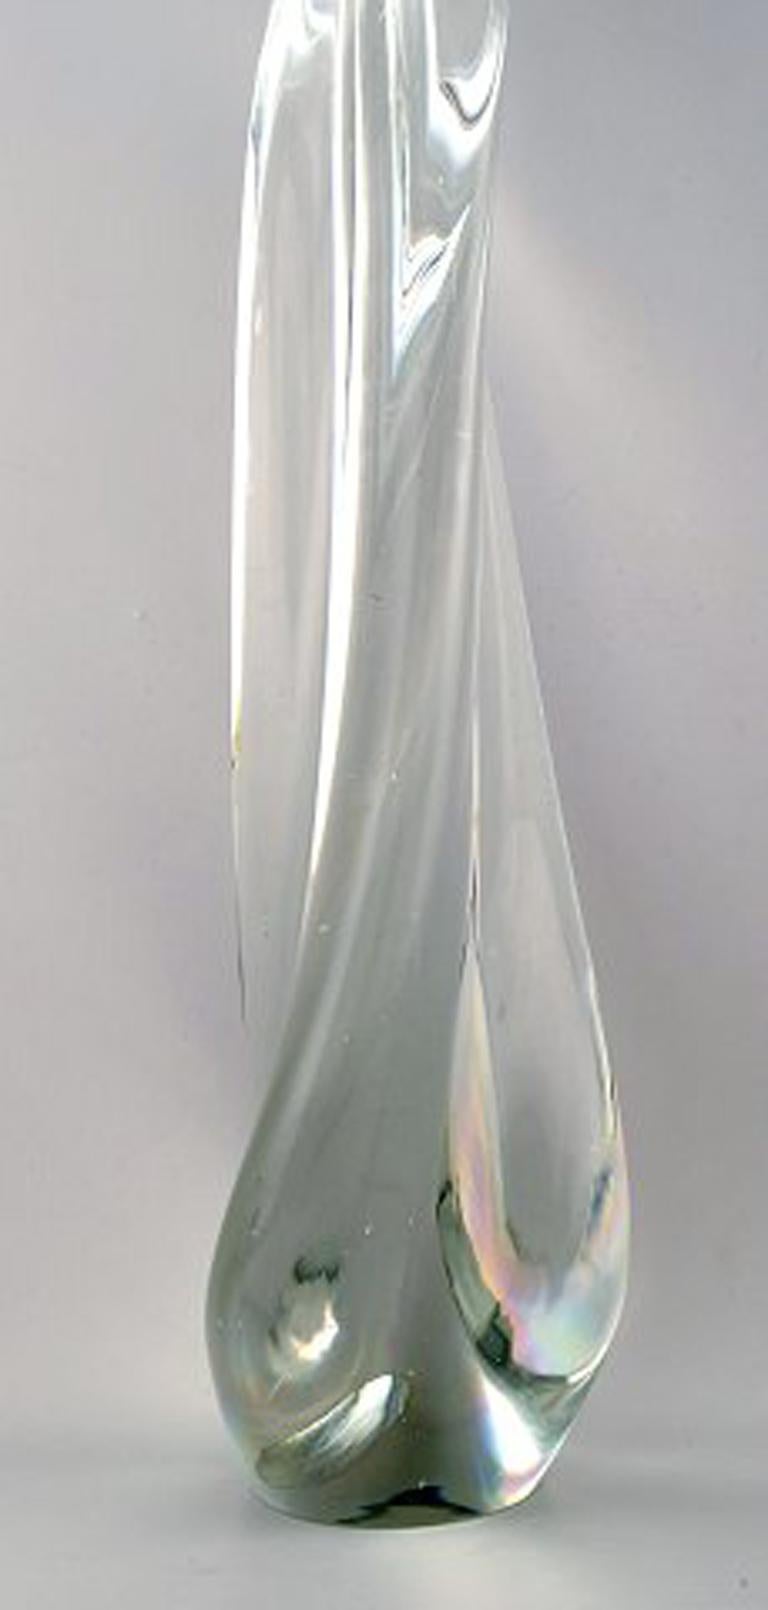 Modern Colossal Art Glass Sculpture in Crystal by K. Jablonski, Poland